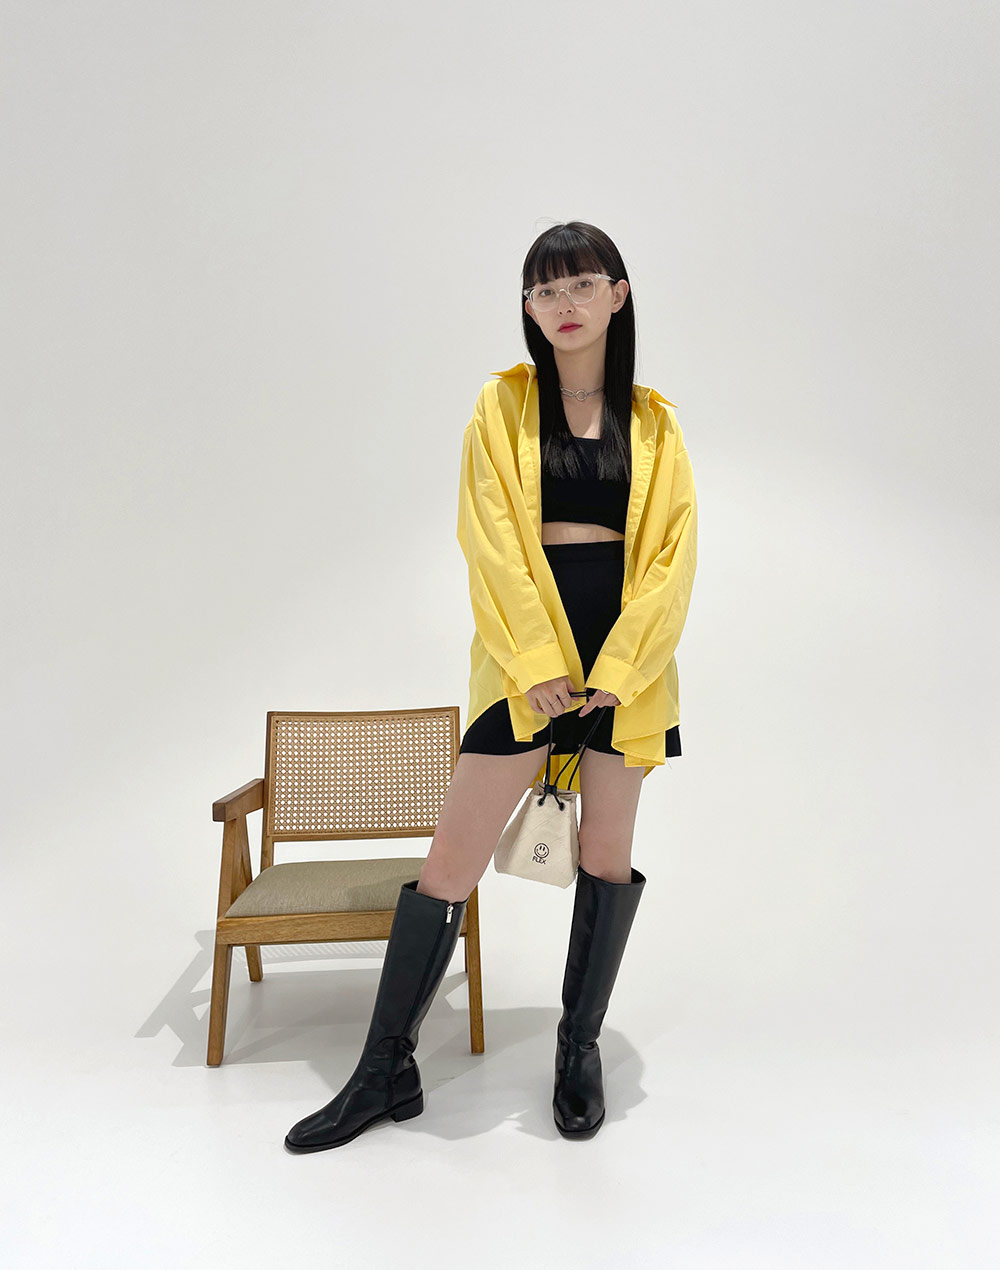 mini skirt・p275999（スカート/スカート）| hitomi.nakazawa | 東京ガールズマーケット